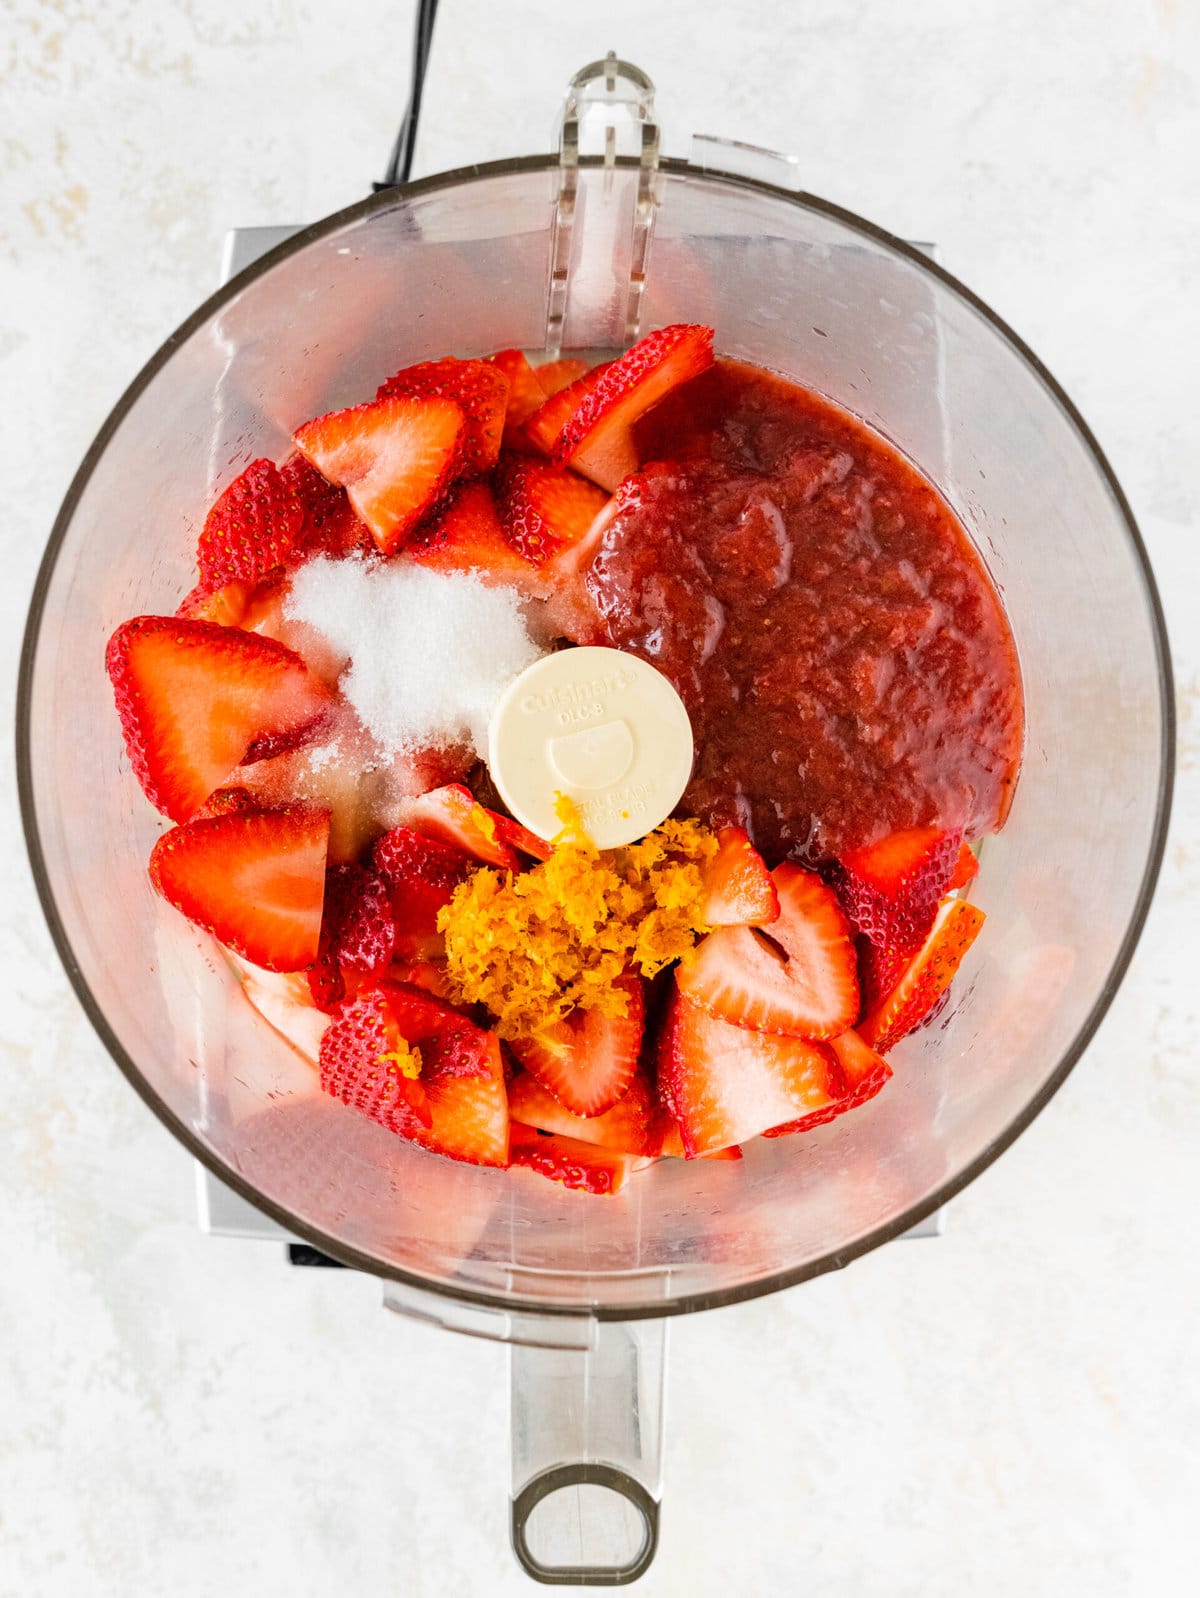 How to make Strawberry Tiramisu (no egg)- make the strawberry puree in the blender.